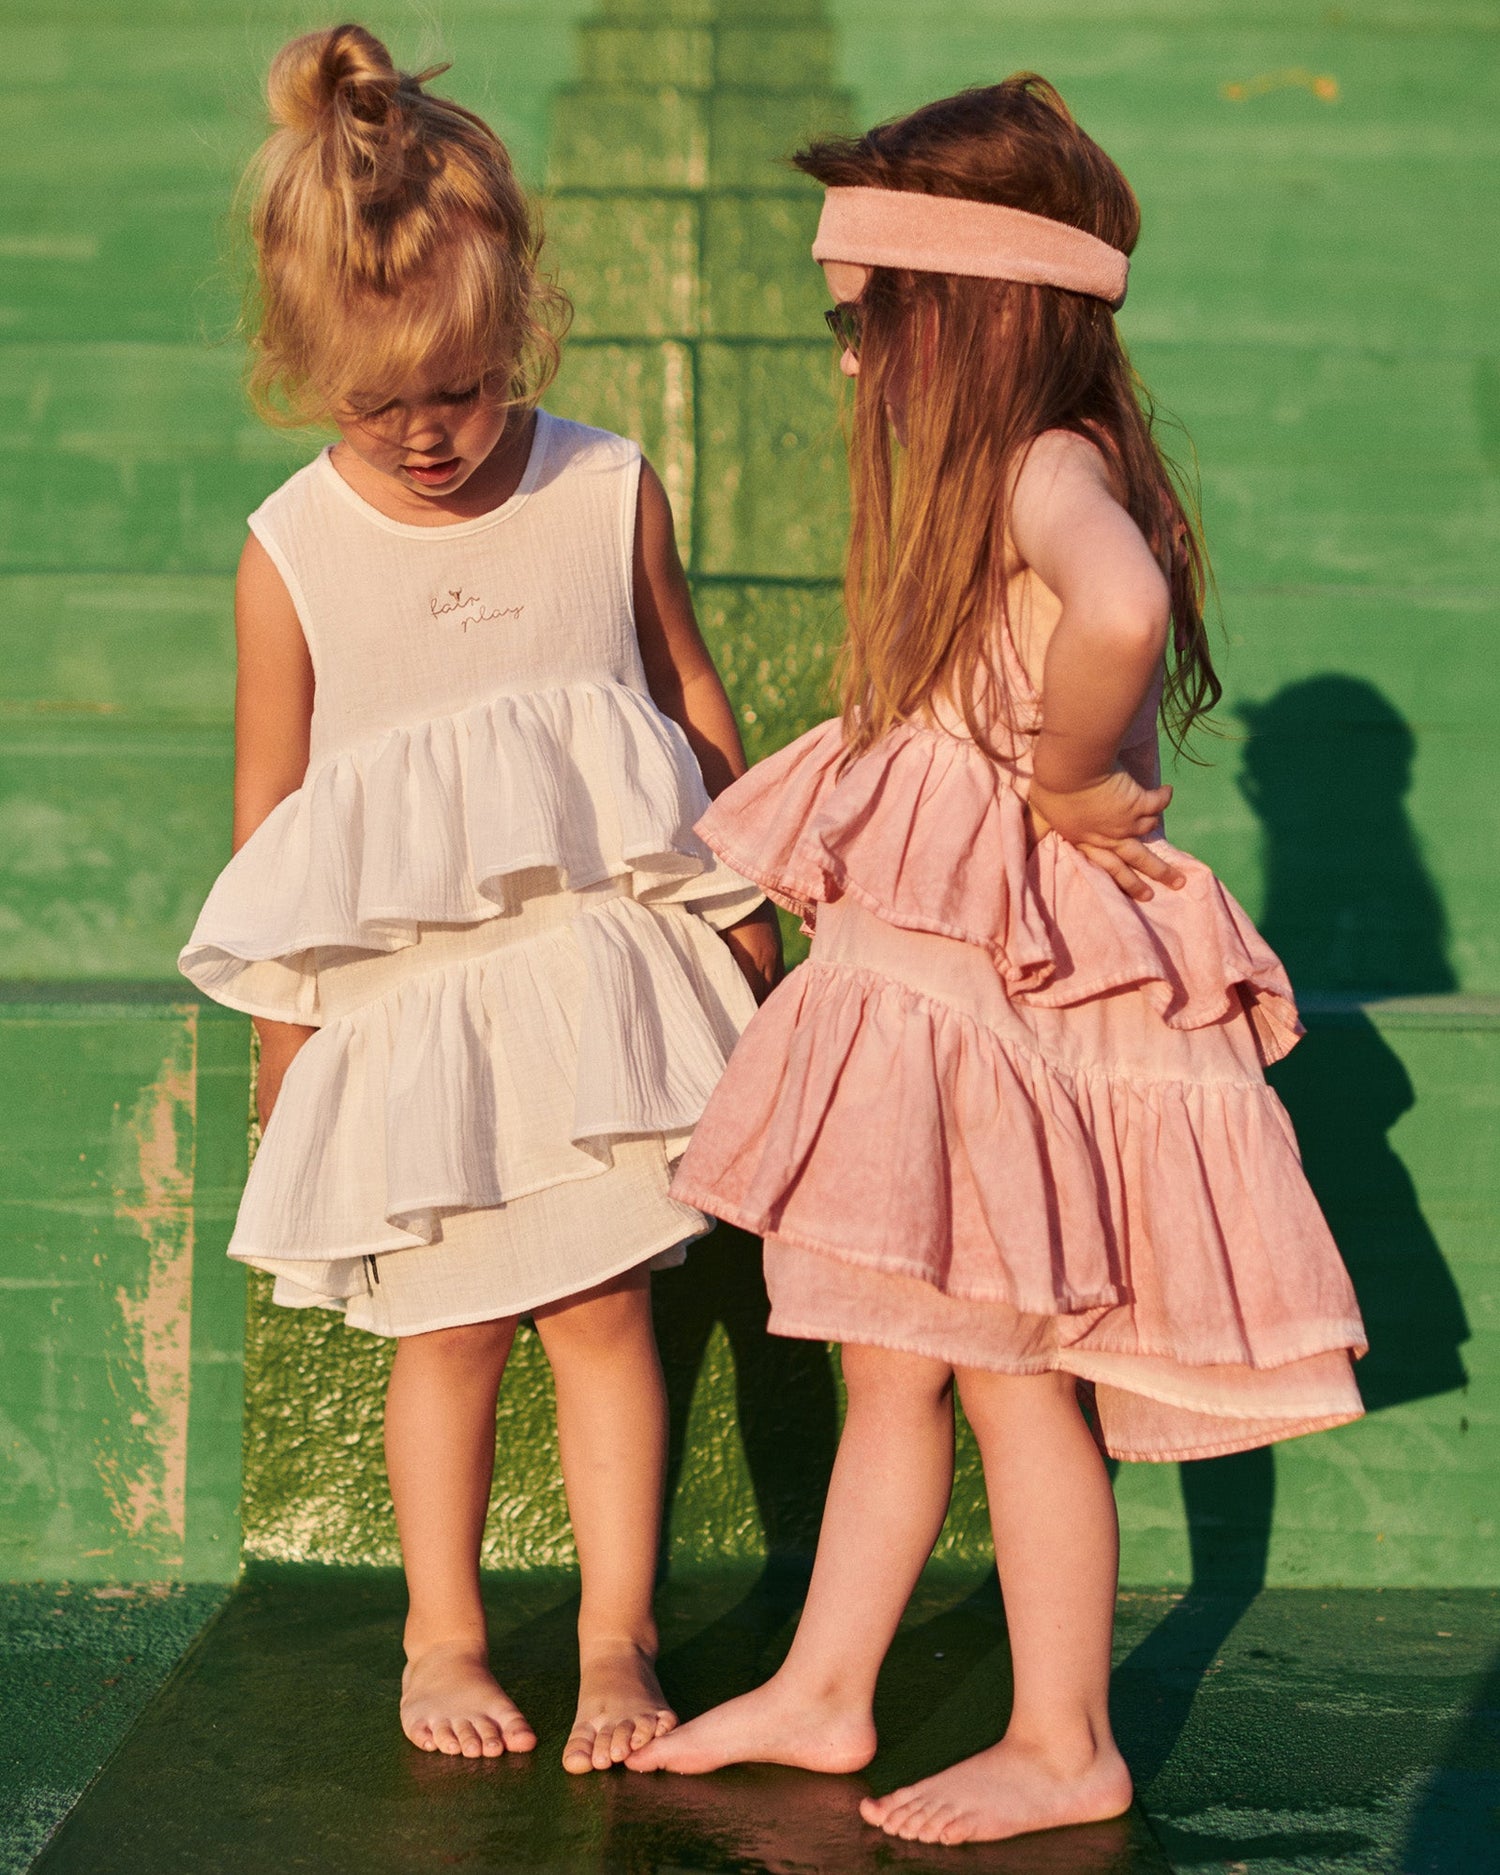 sukienka dziecięca- WAVE COLDDYE DRESS light pink